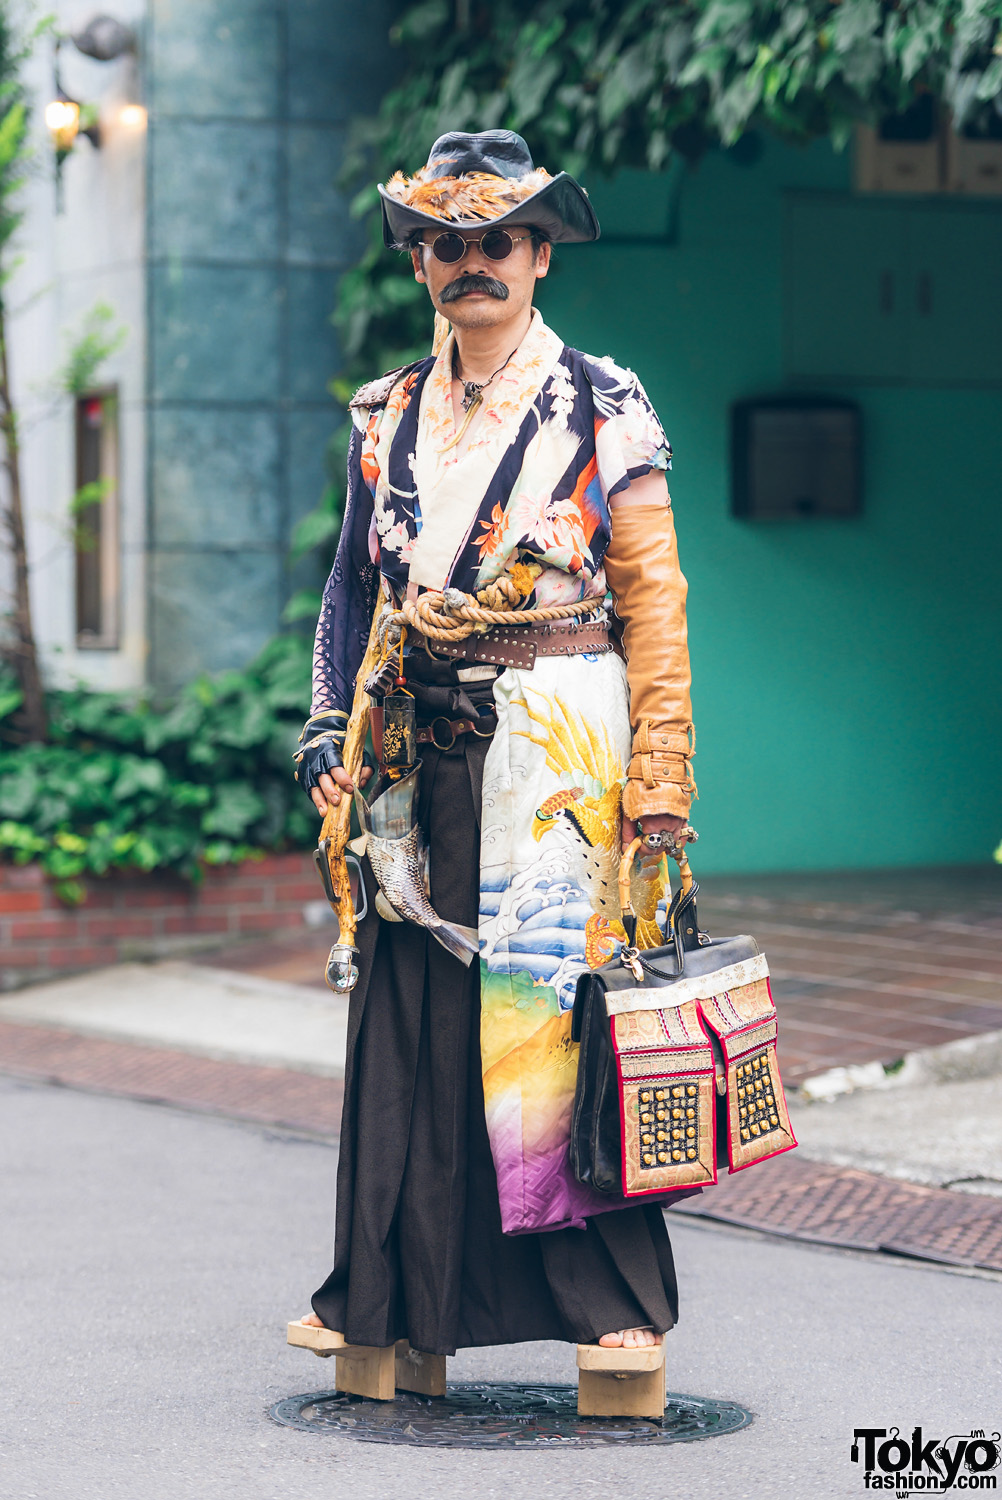 Japanese Steampunk Street Fashion w/ Embroidered Kimono, Geta Sandals & Handmade Items